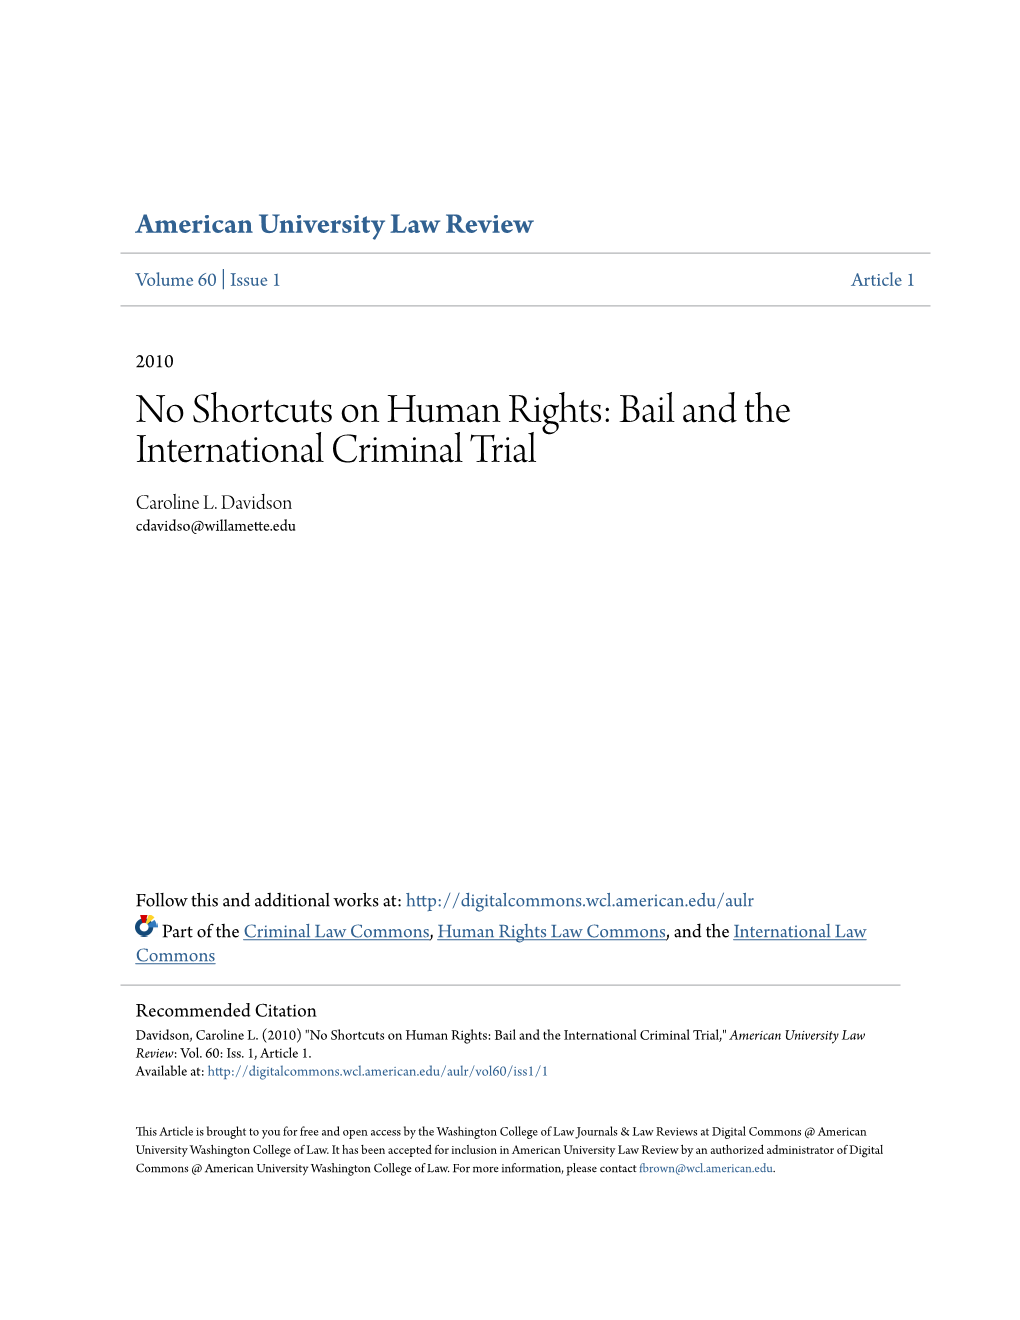 Bail and the International Criminal Trial Caroline L